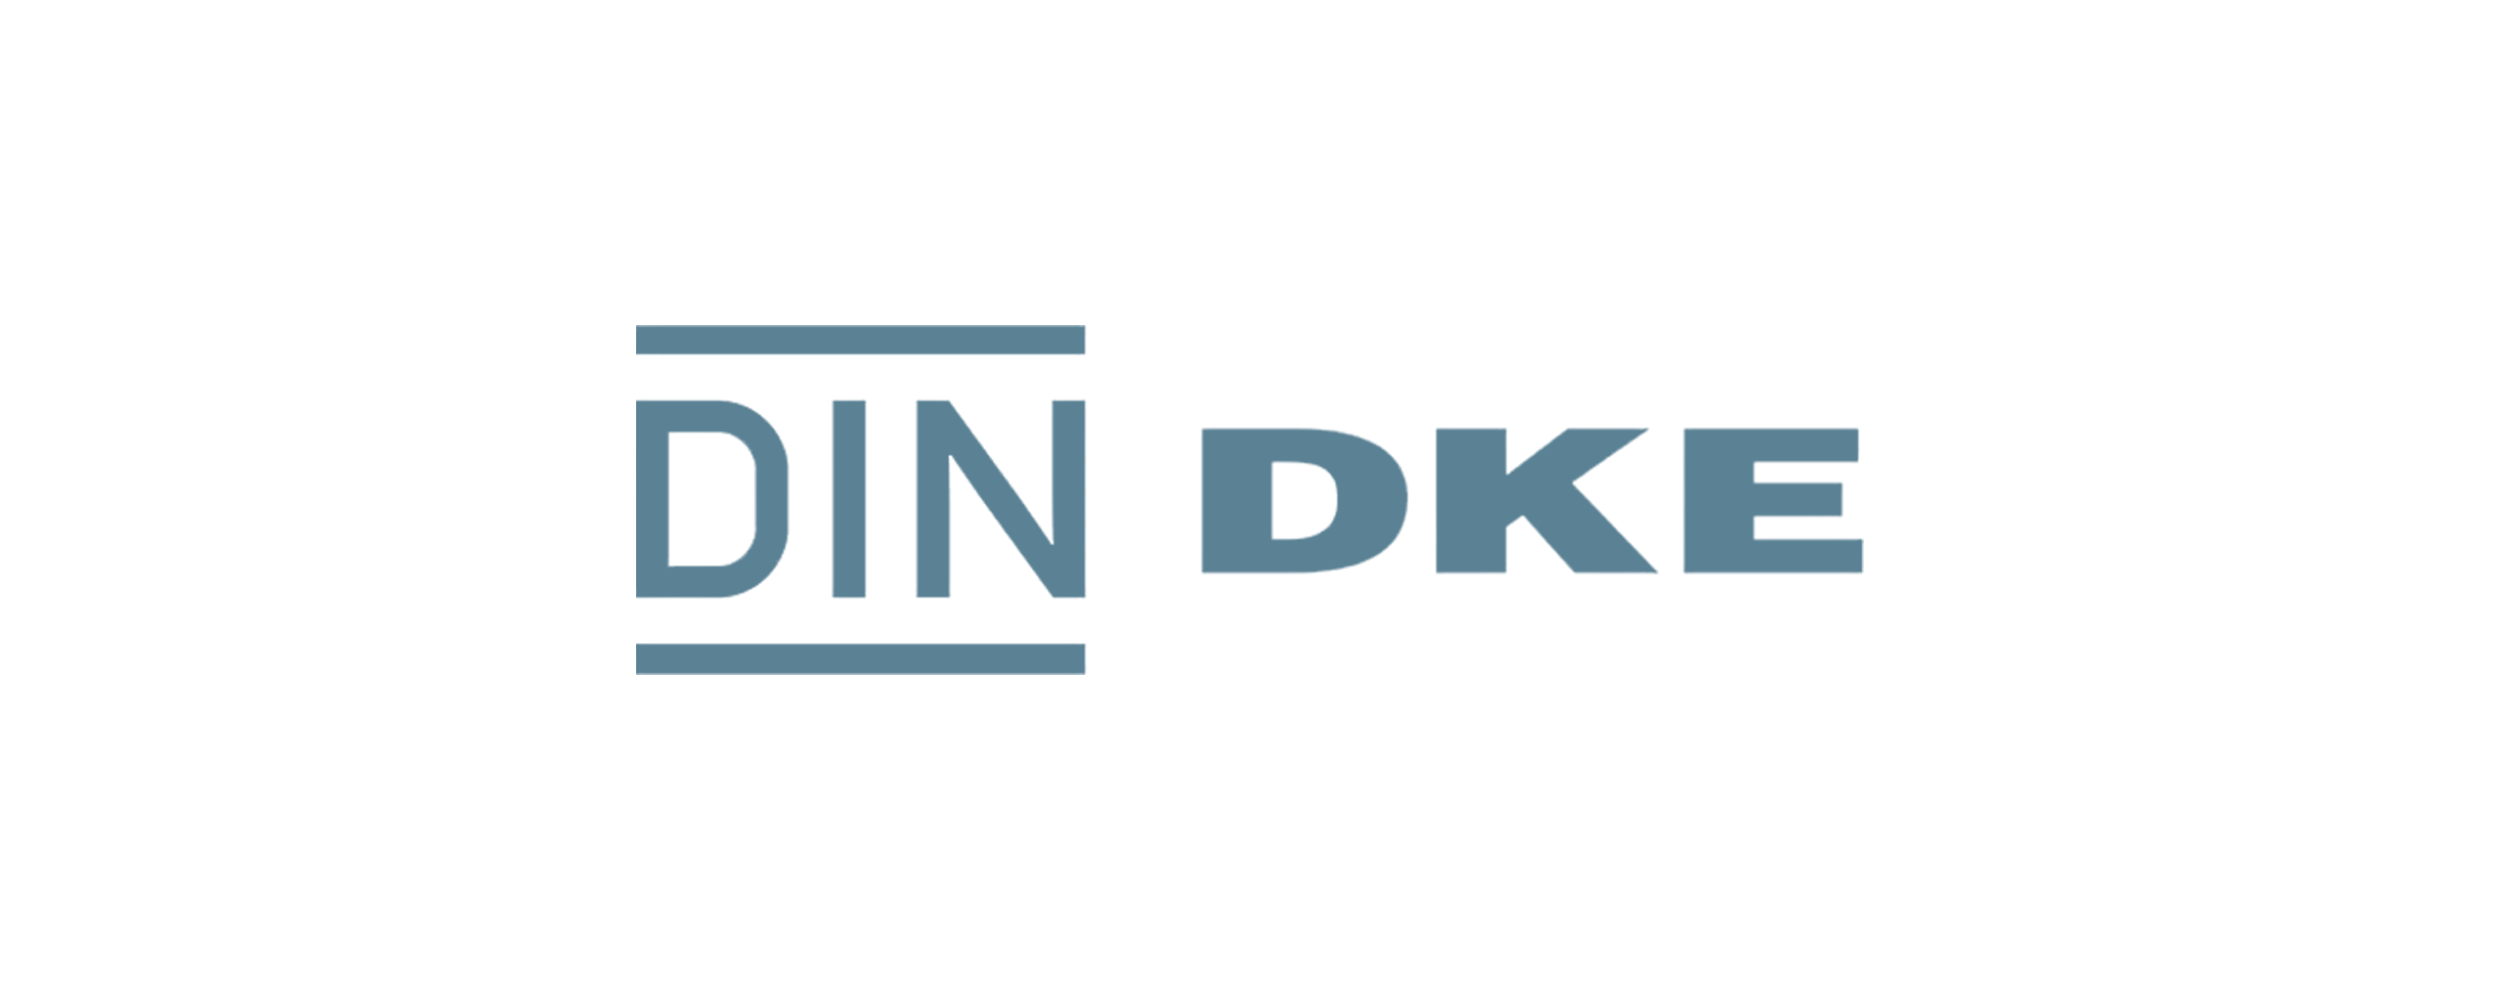 logo-din-dke.png